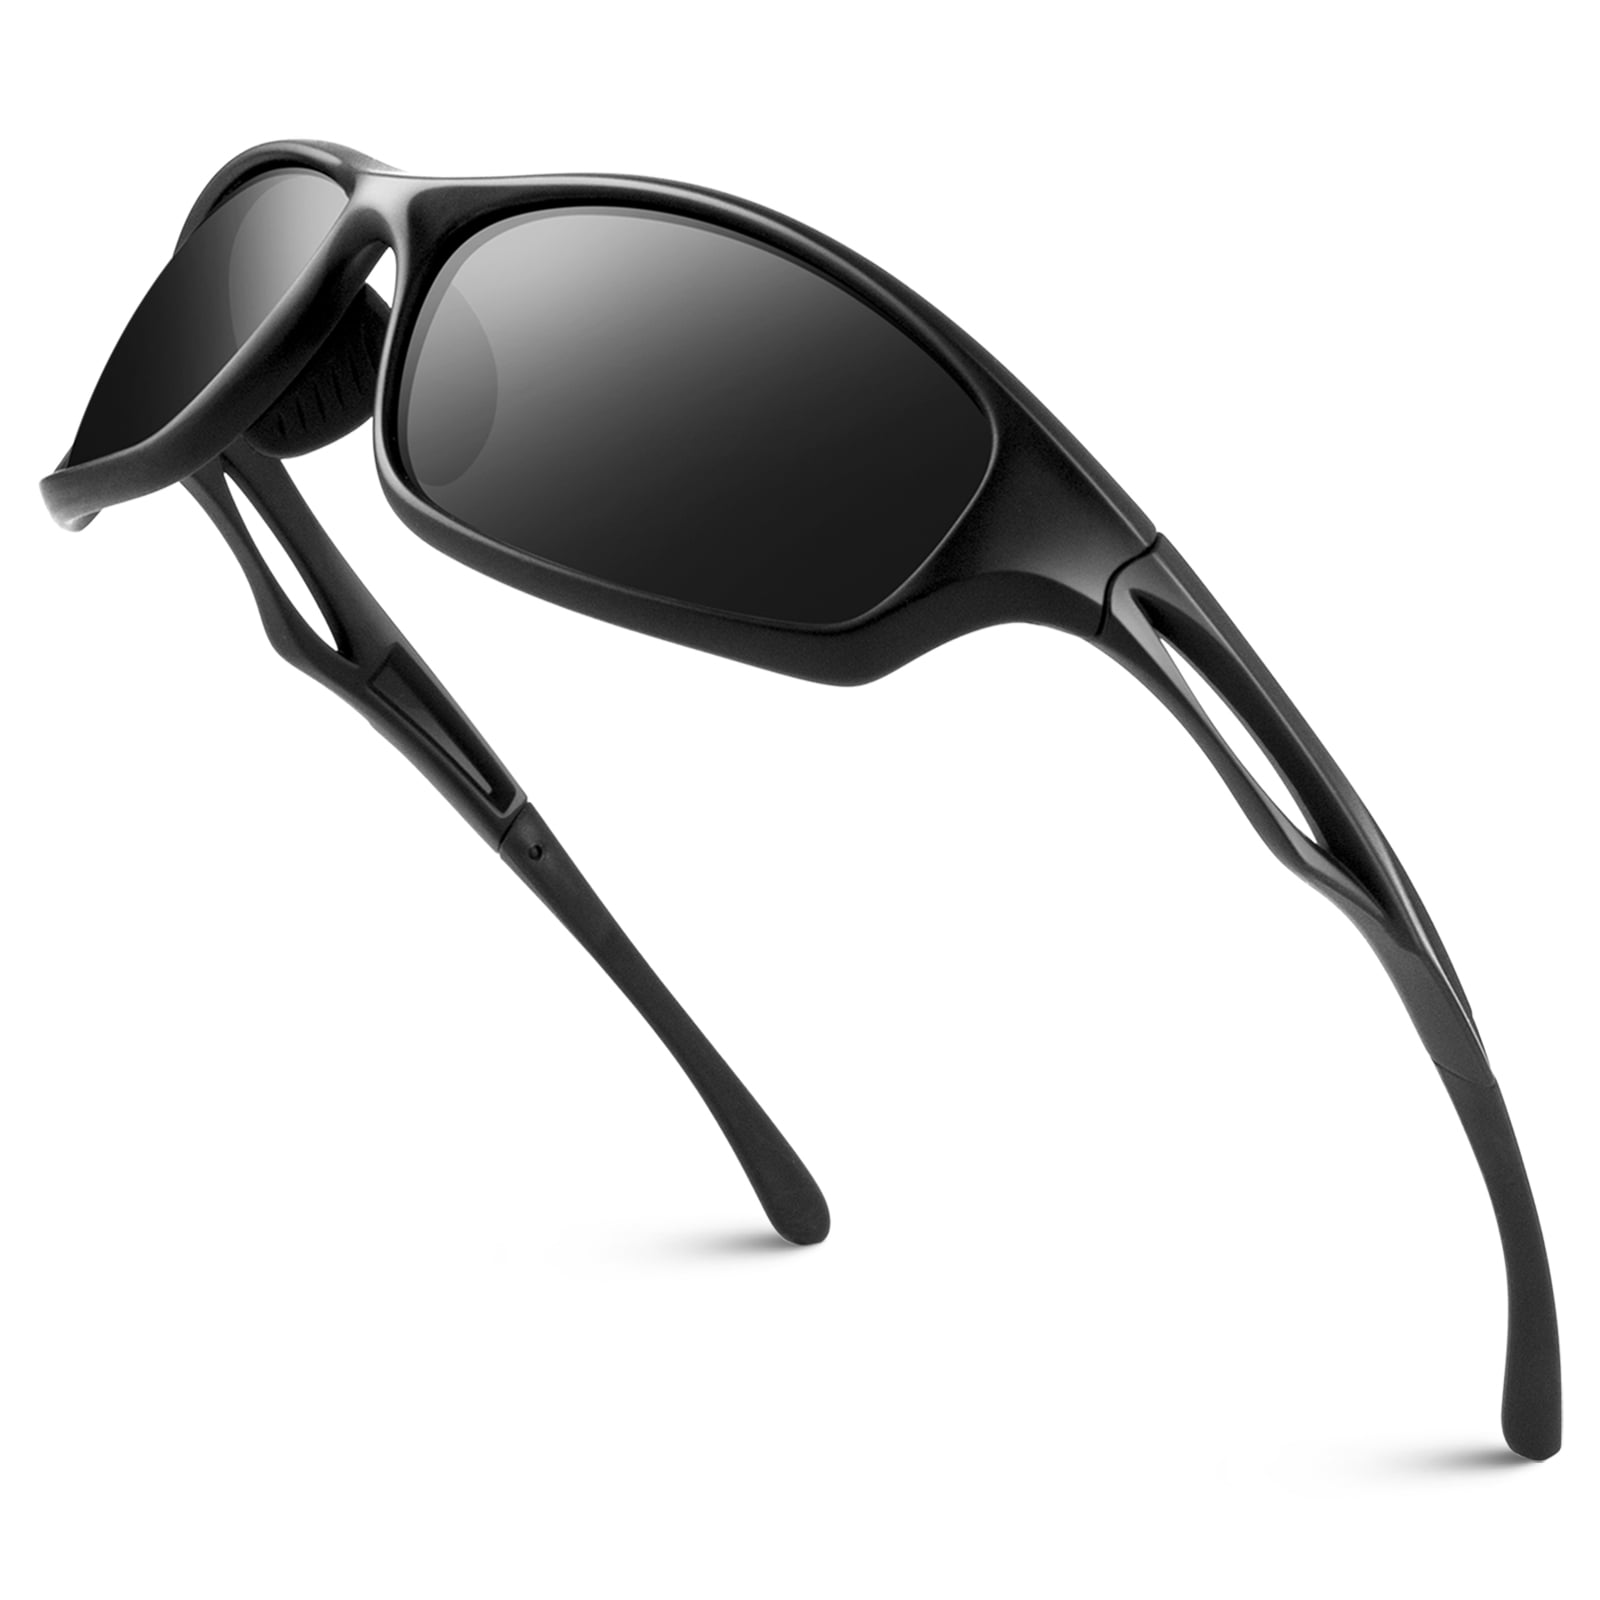 BluWater Samson 2 Polarized Sunglasses for Men Scratch-Resistant